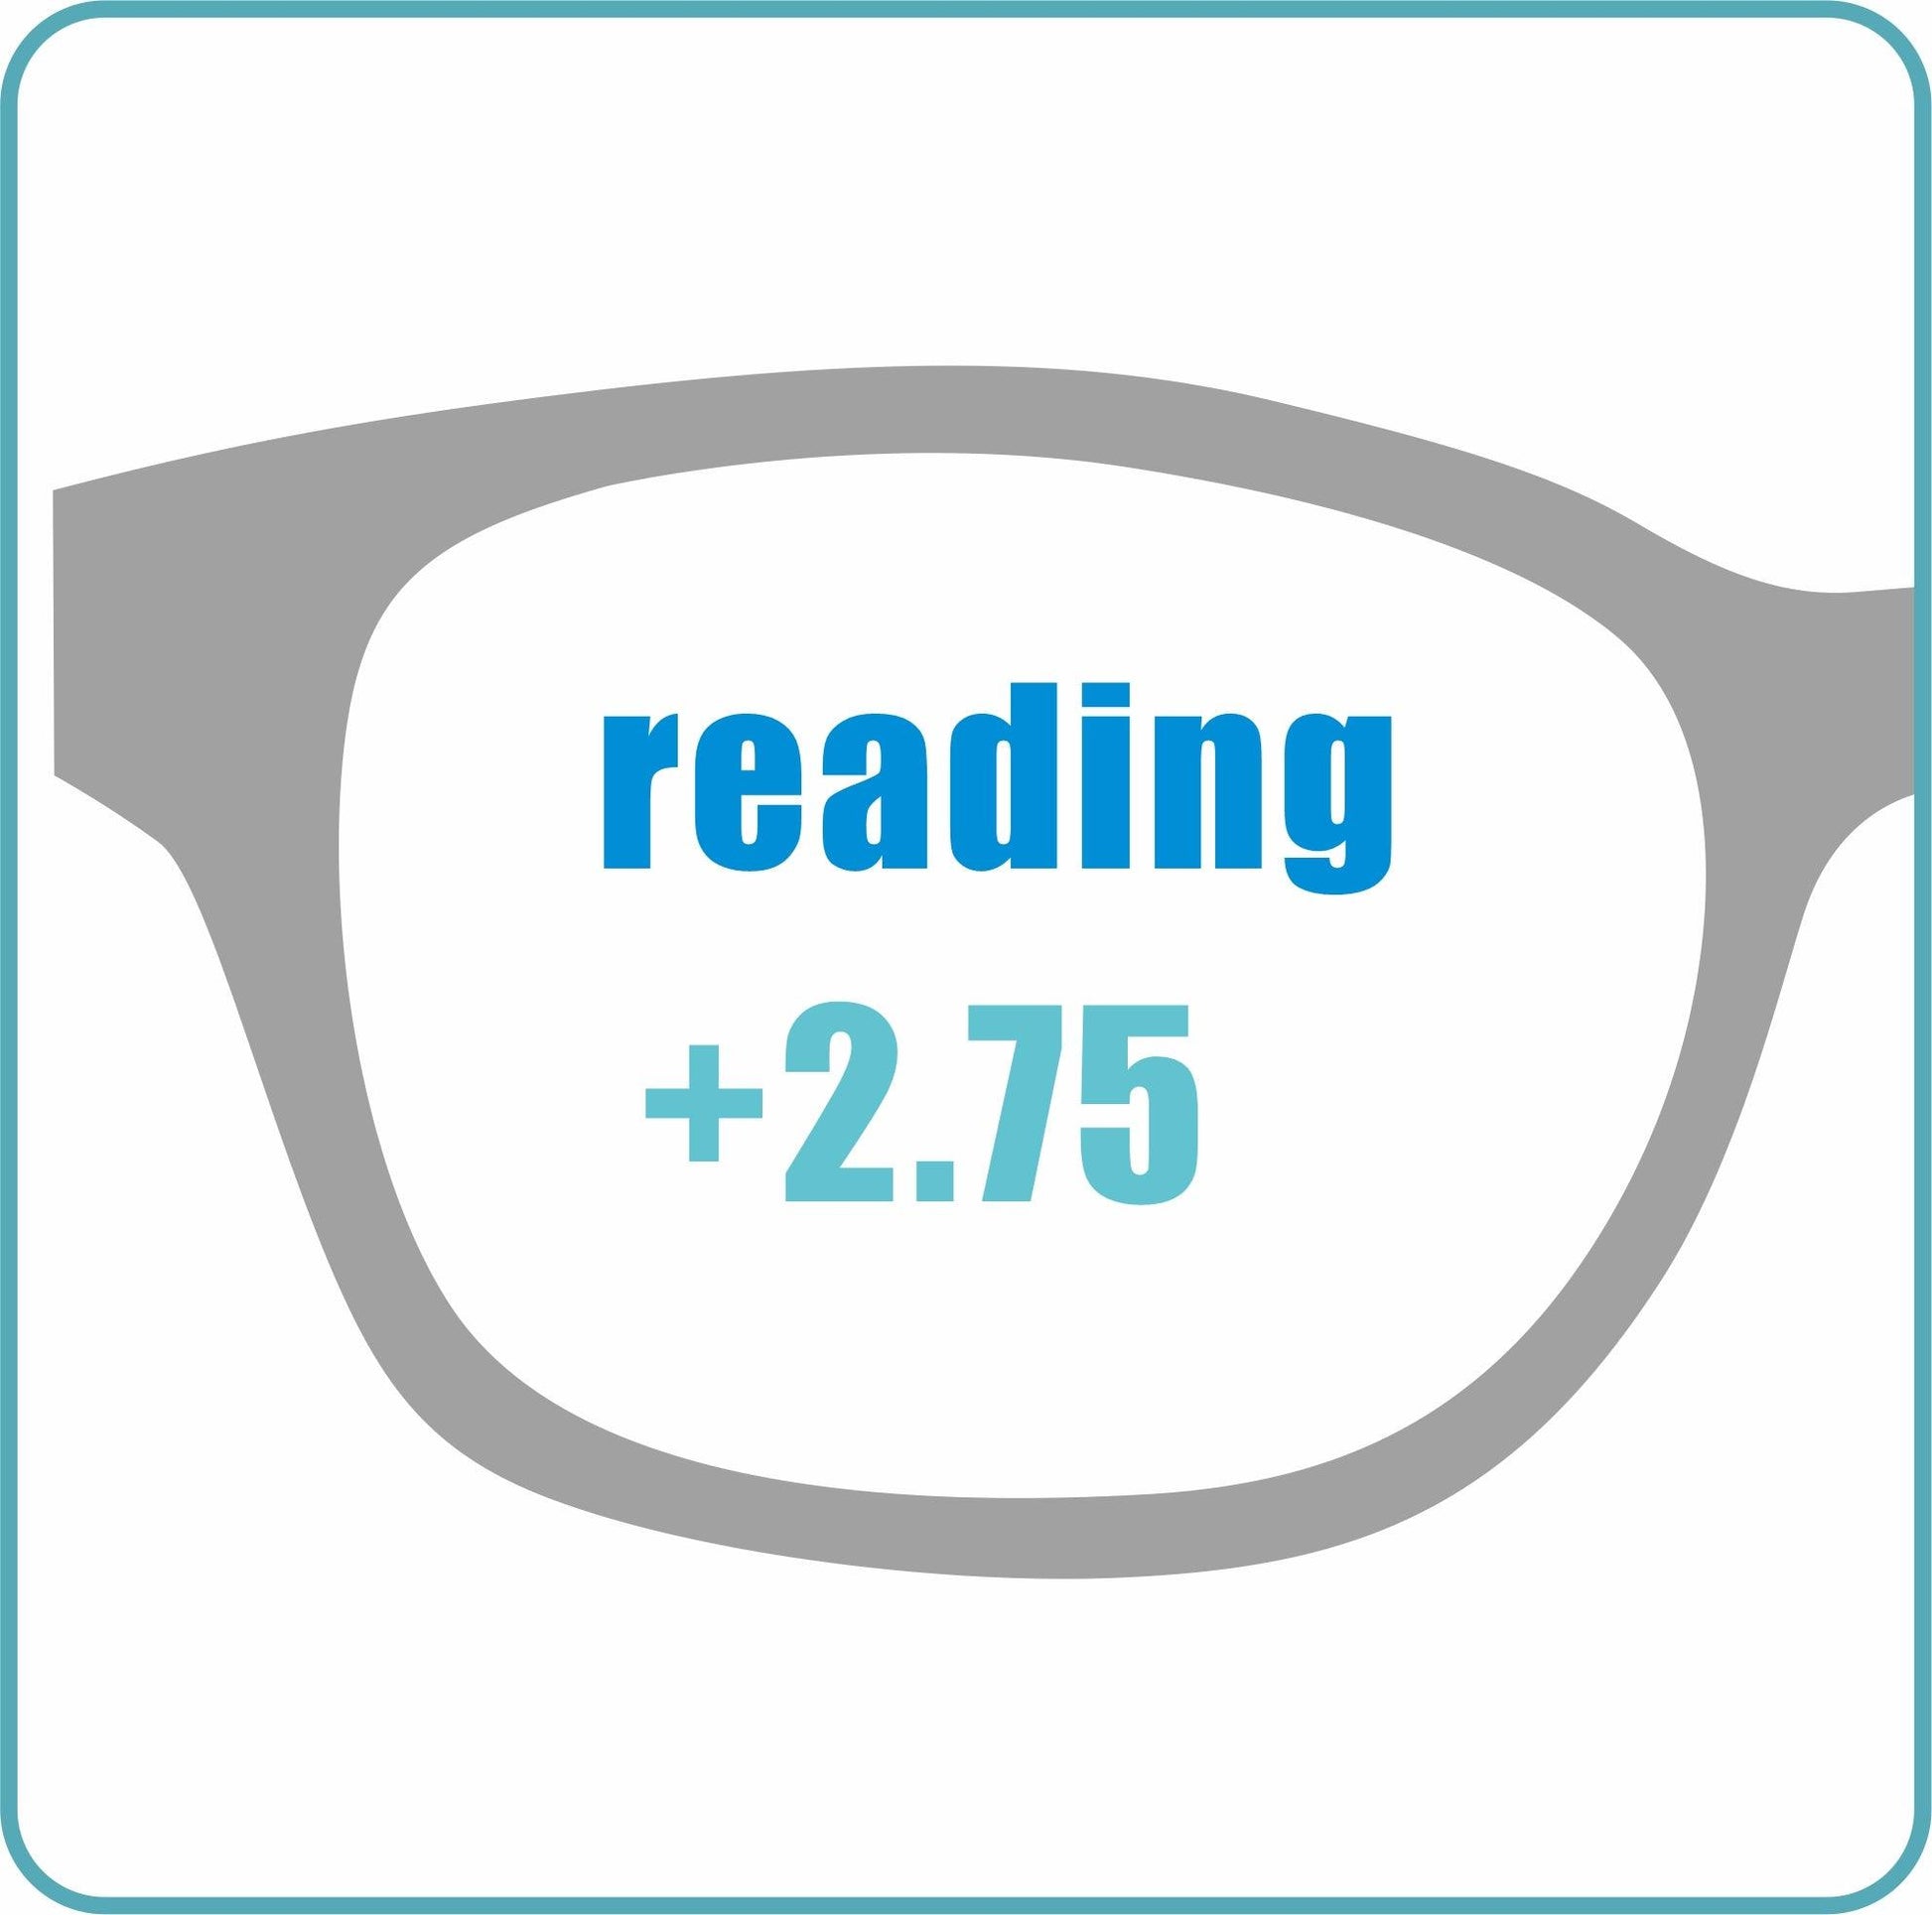 acetate S L-001 Blue Bold Reading Eyeglasses - takeprogressive